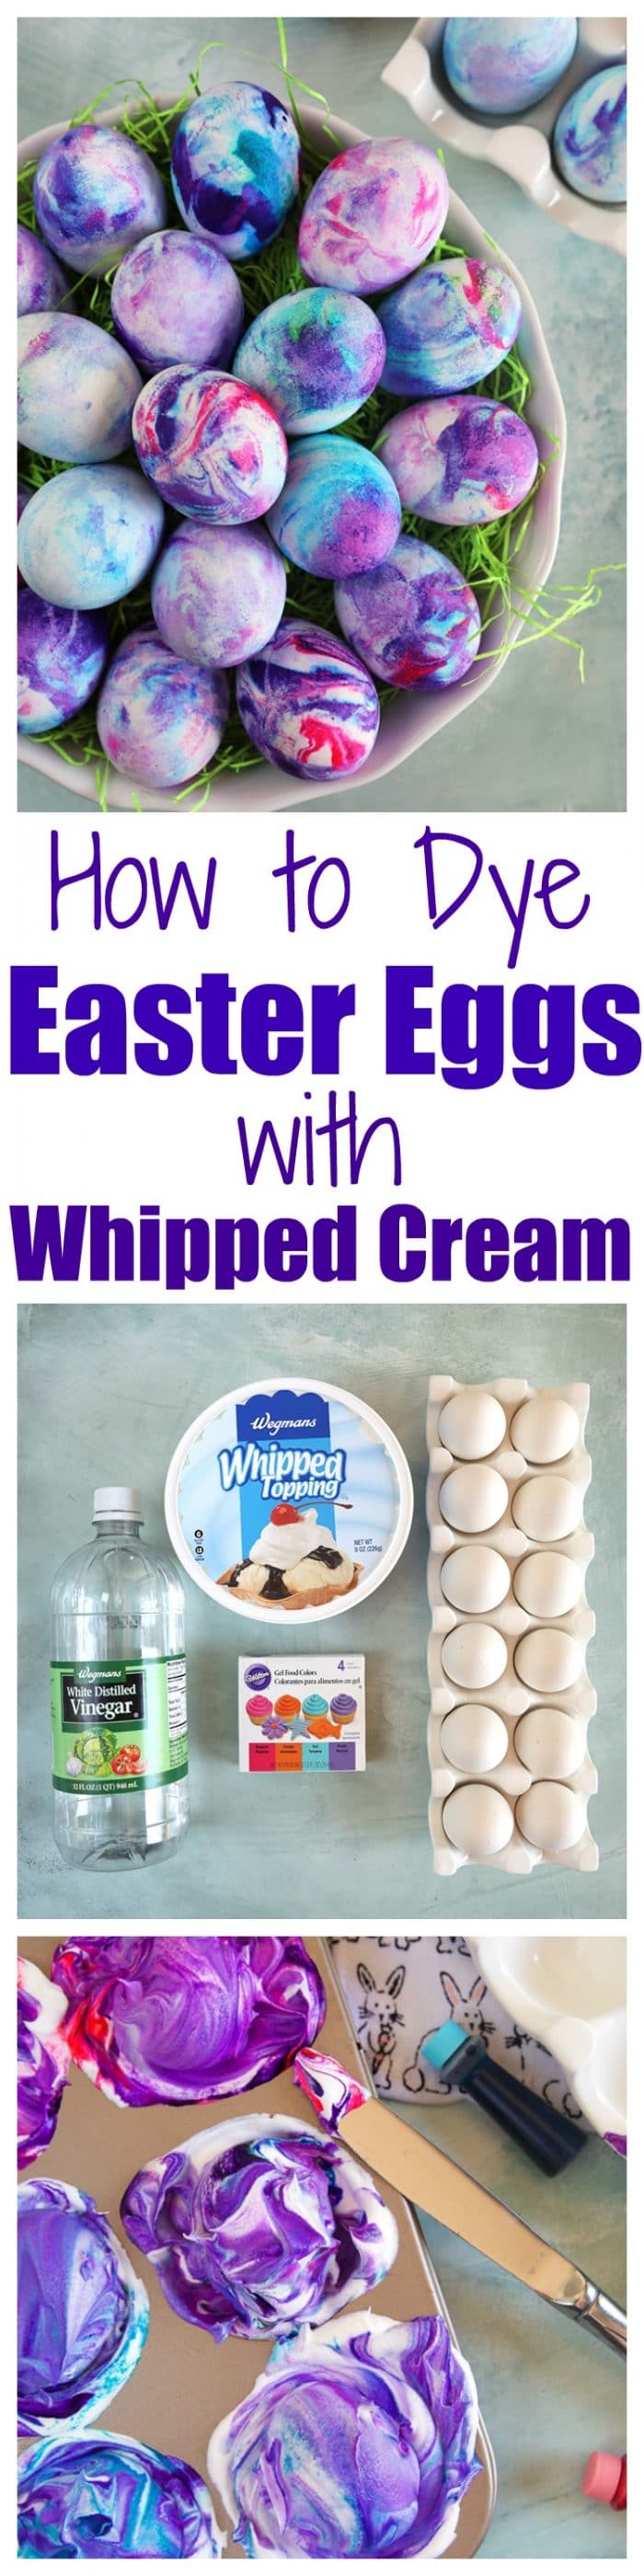 Whipped Cream Easter Egg Dye Collage